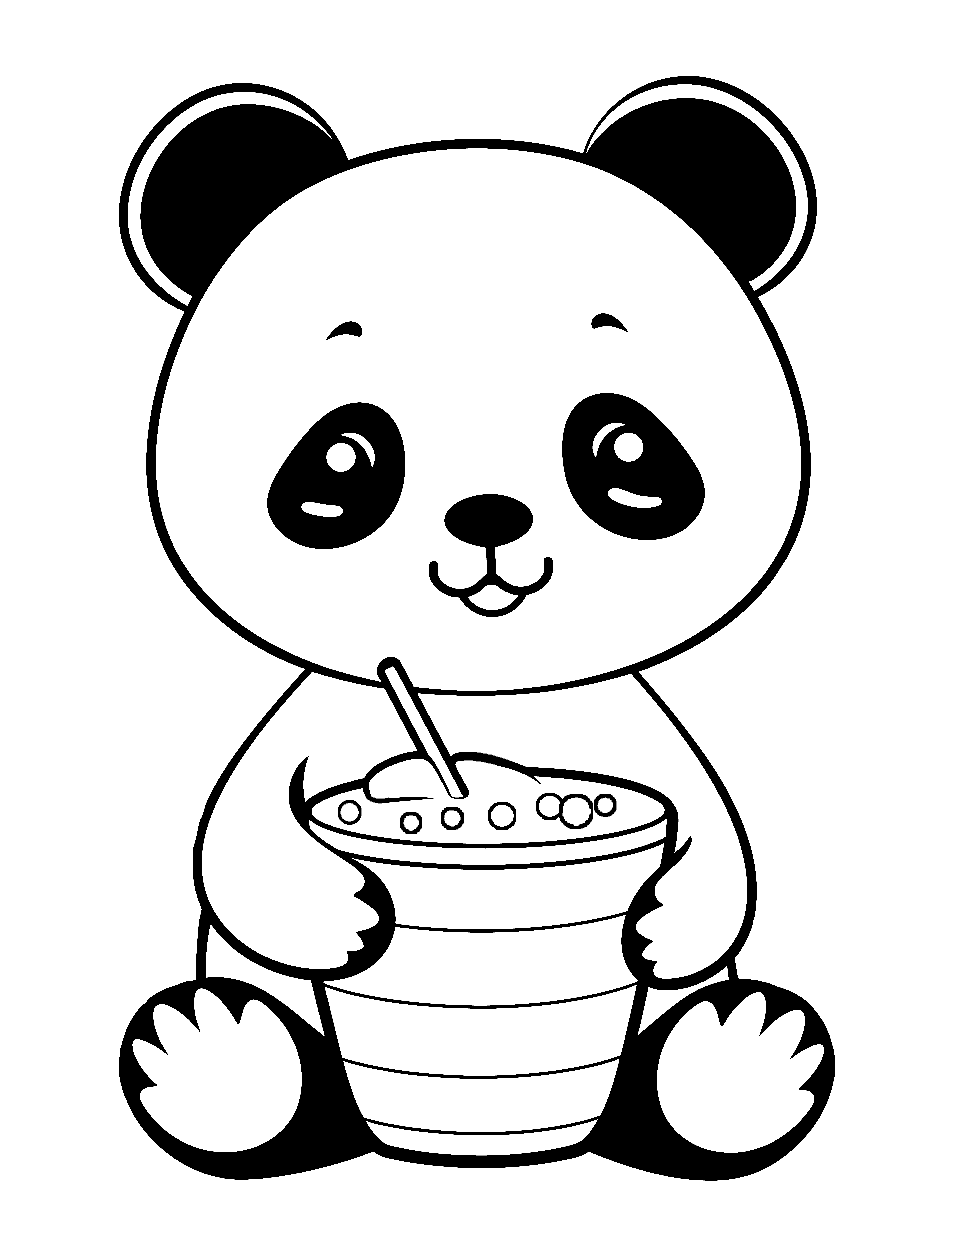 Kawaii Panda and Bubble Tea Coloring Page - A kawaii panda holding a large cup of bubble tea.